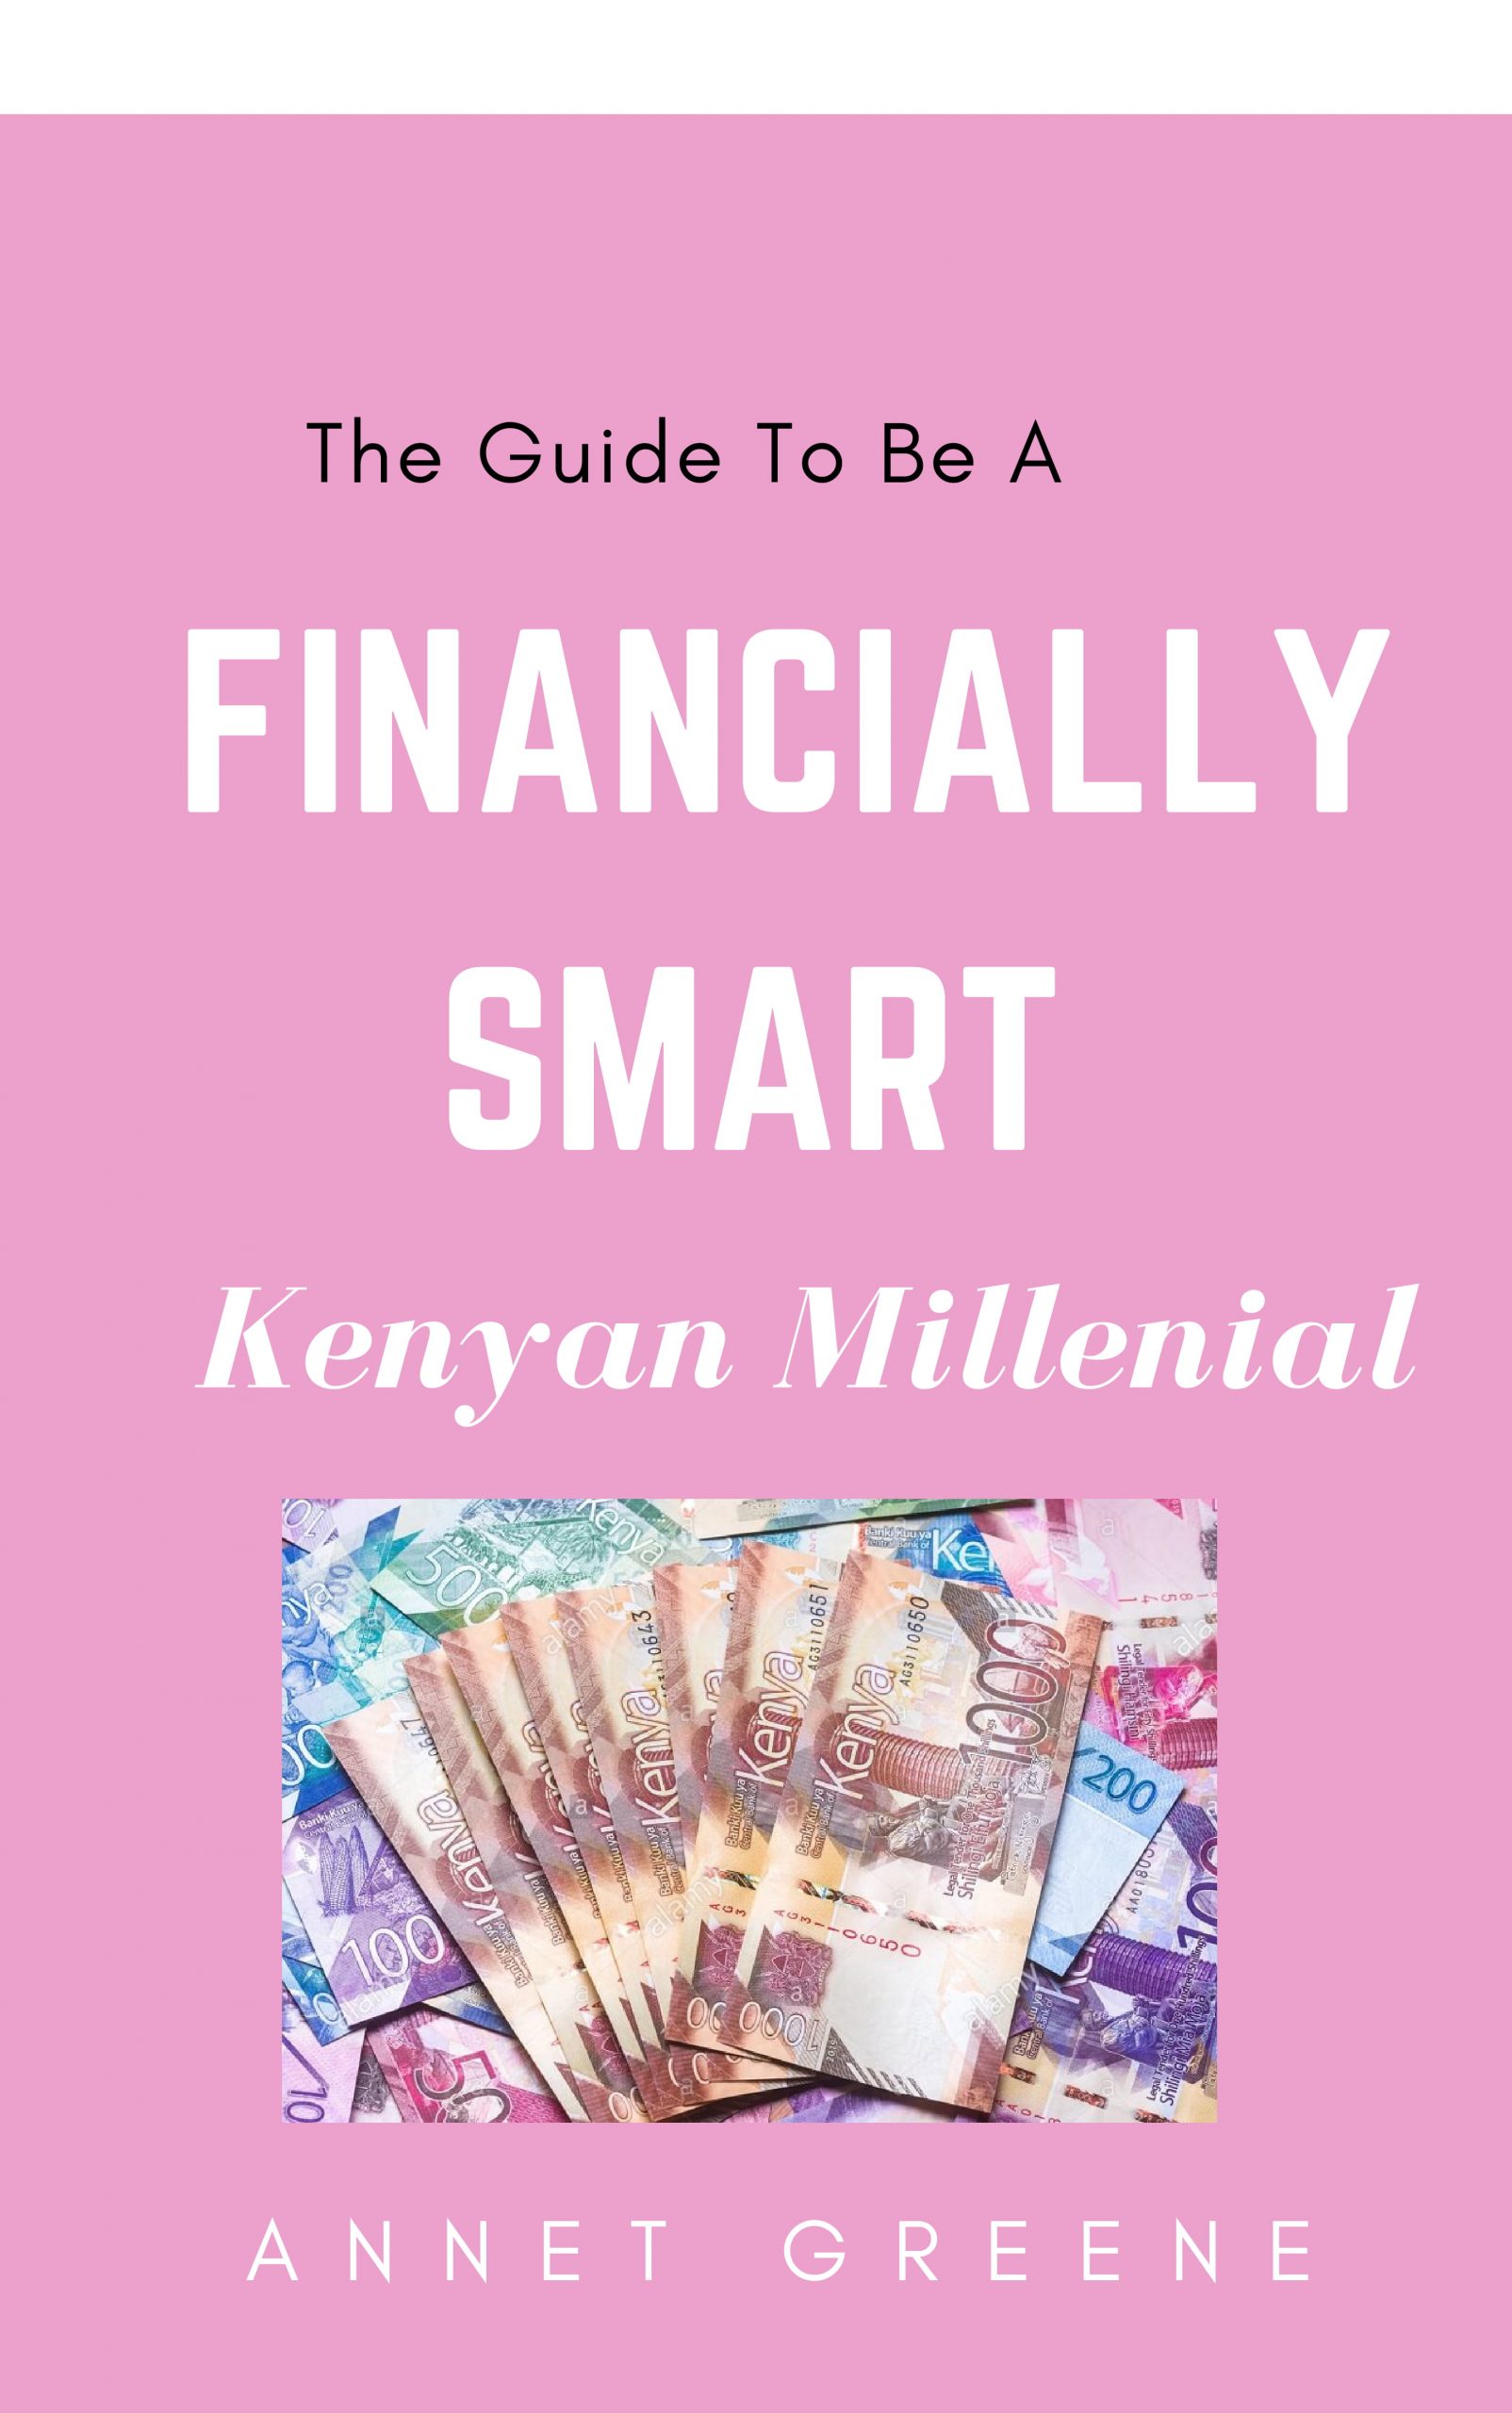 The Guide To Be A Financially Smart Kenyan Millennial